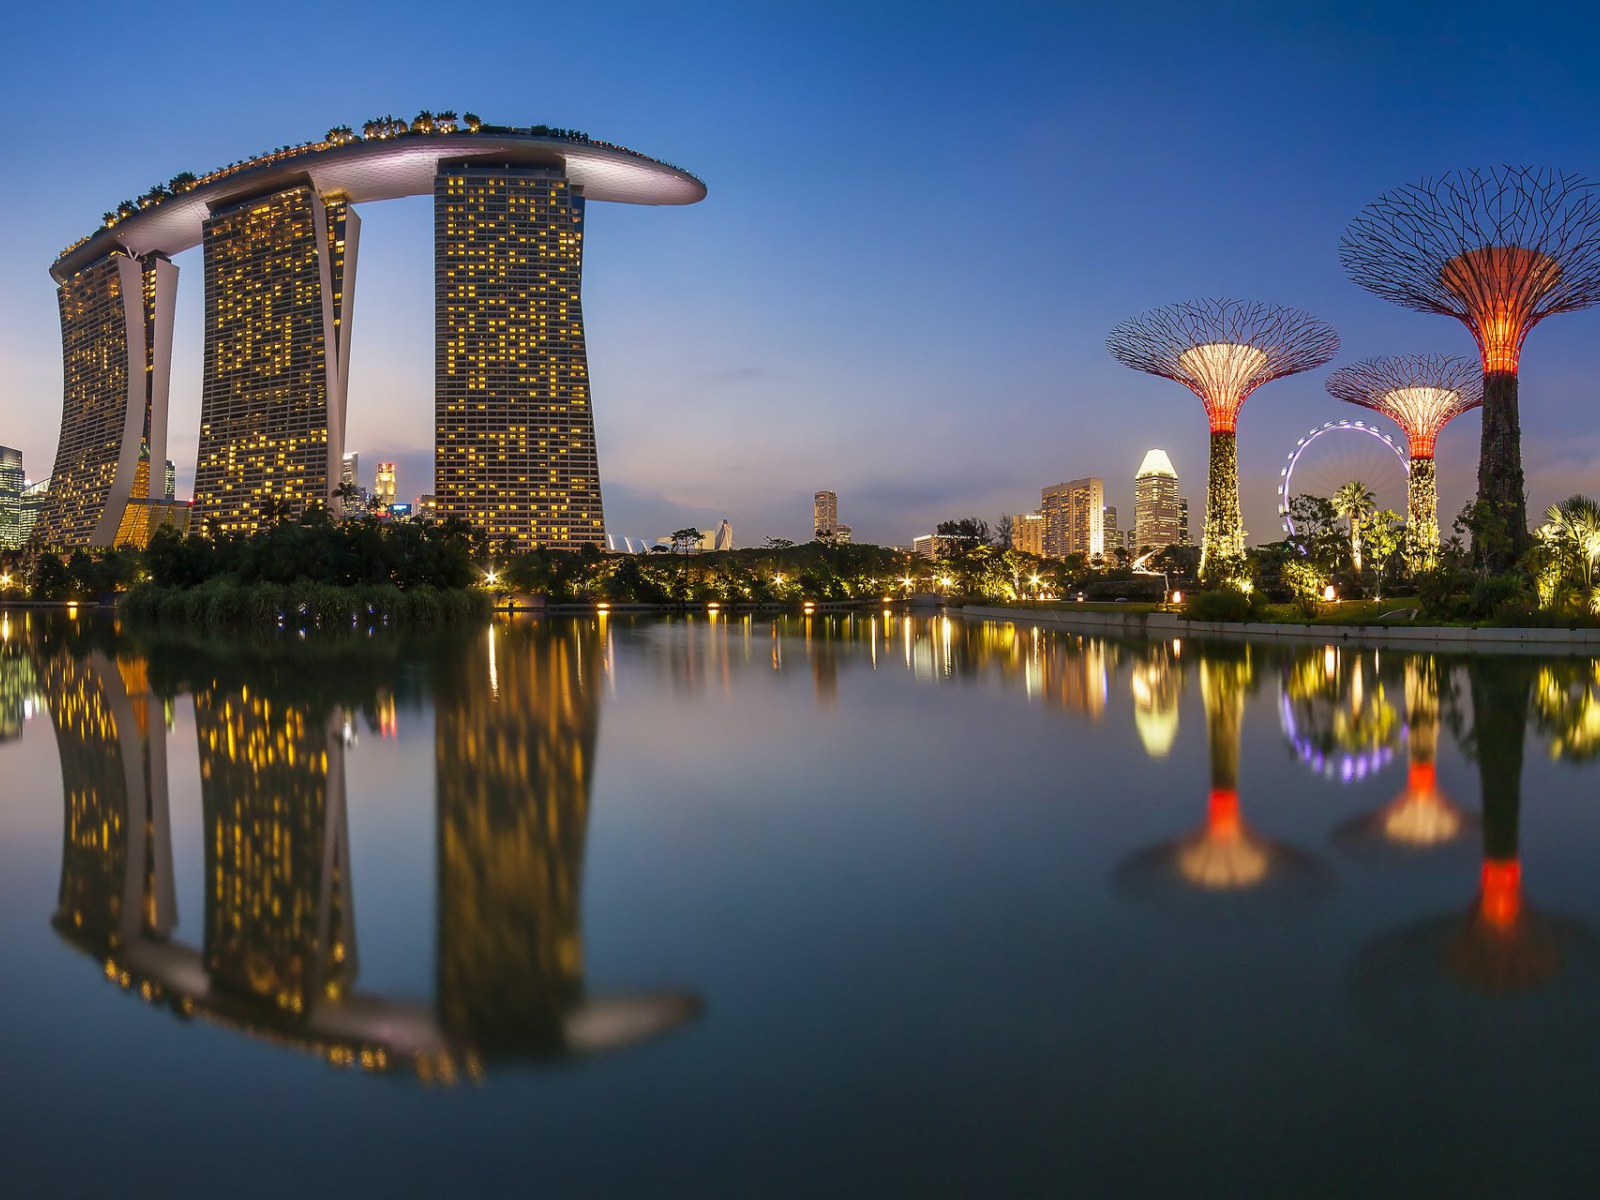 View of the night hotel Marina Bay, Singapore